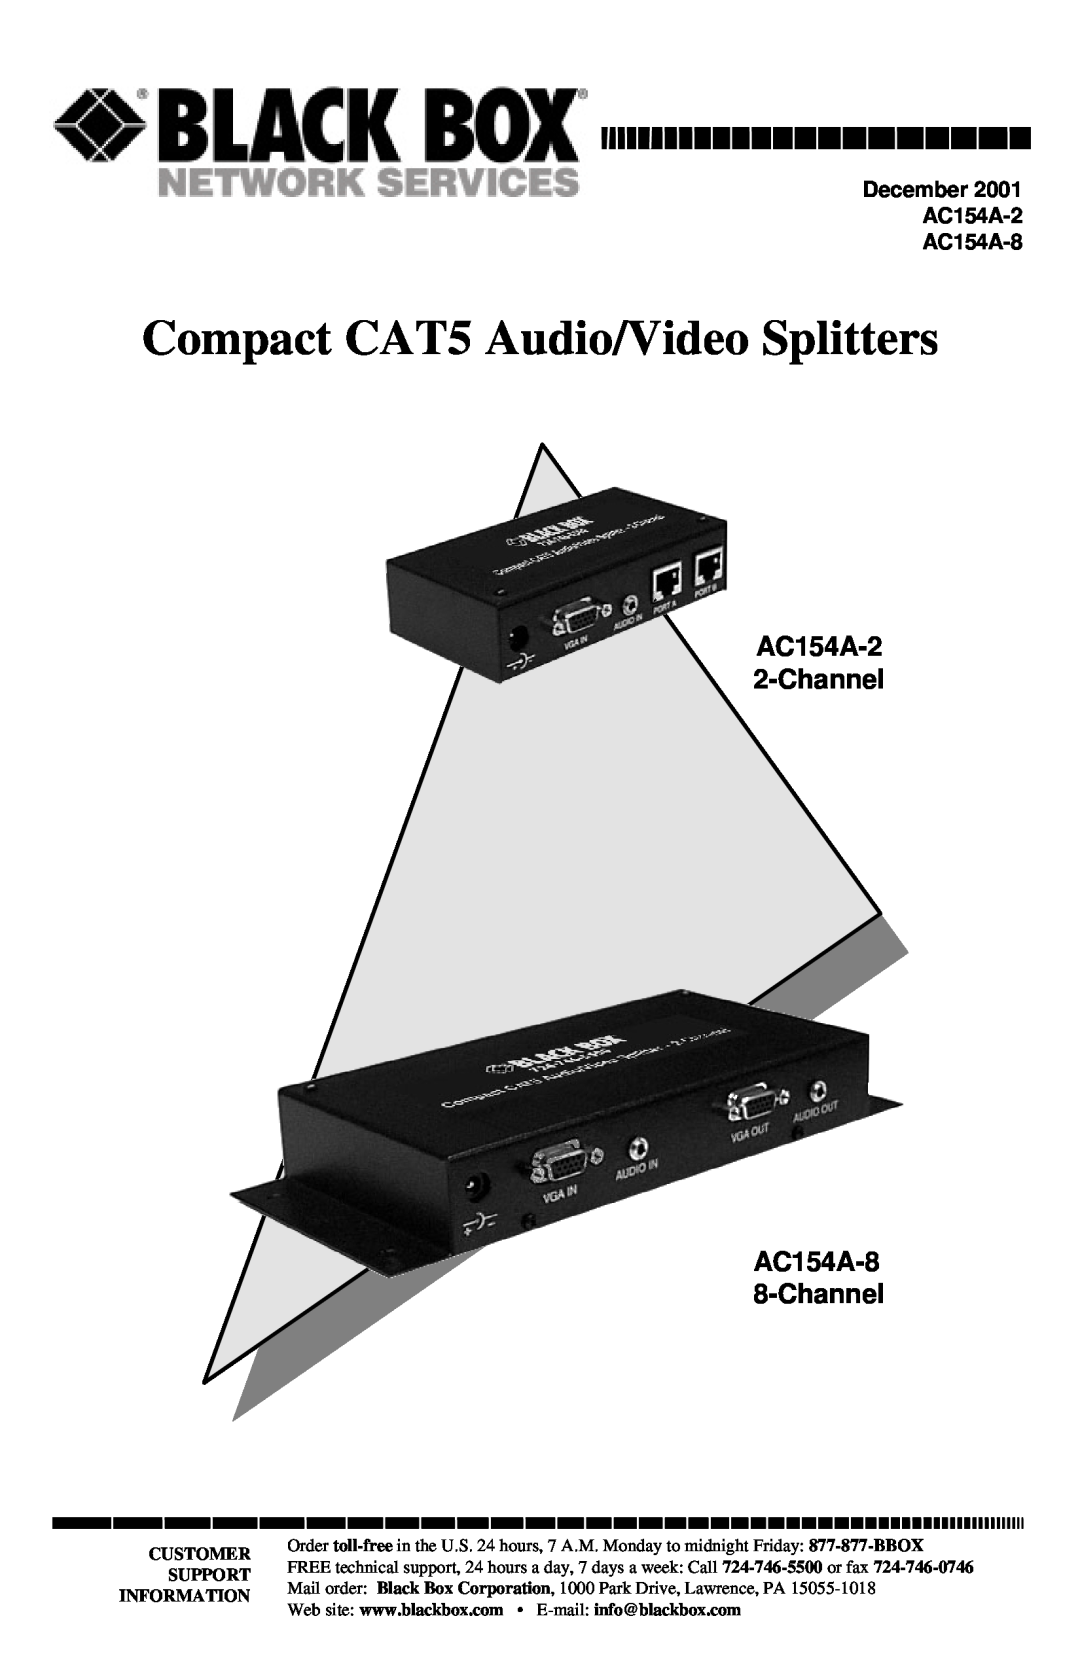 Black Box COMPACT CAT5 AUDIO/VIDEO SPLITTERS manual AC154A-2 2-Channel AC154A-8 8-Channel, December AC154A-2 AC154A-8 